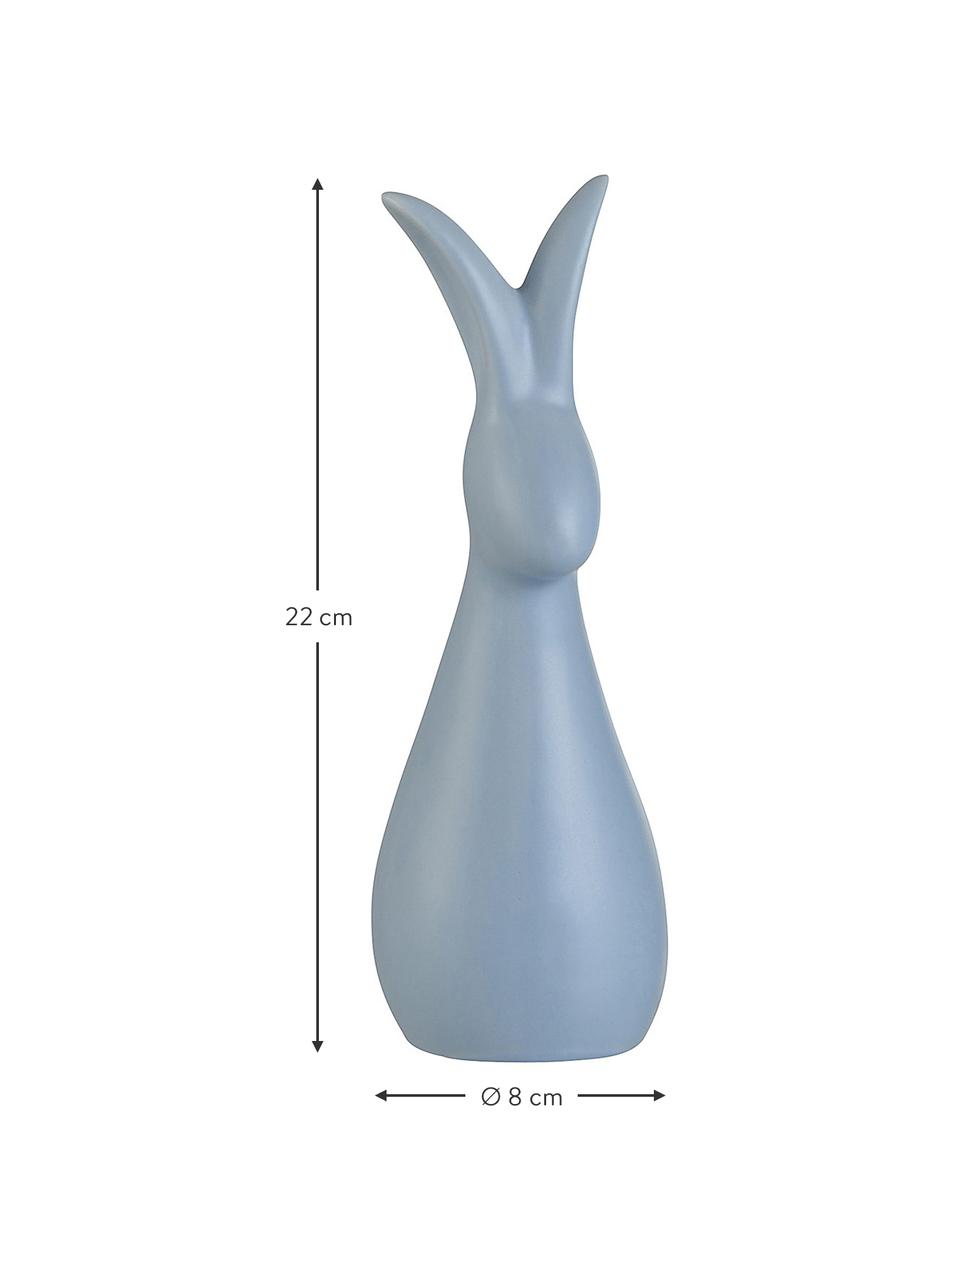 Deko-Objekt-Set Rabbits, 2-tlg., Steingut, Blau, B 8 x H 22 cm